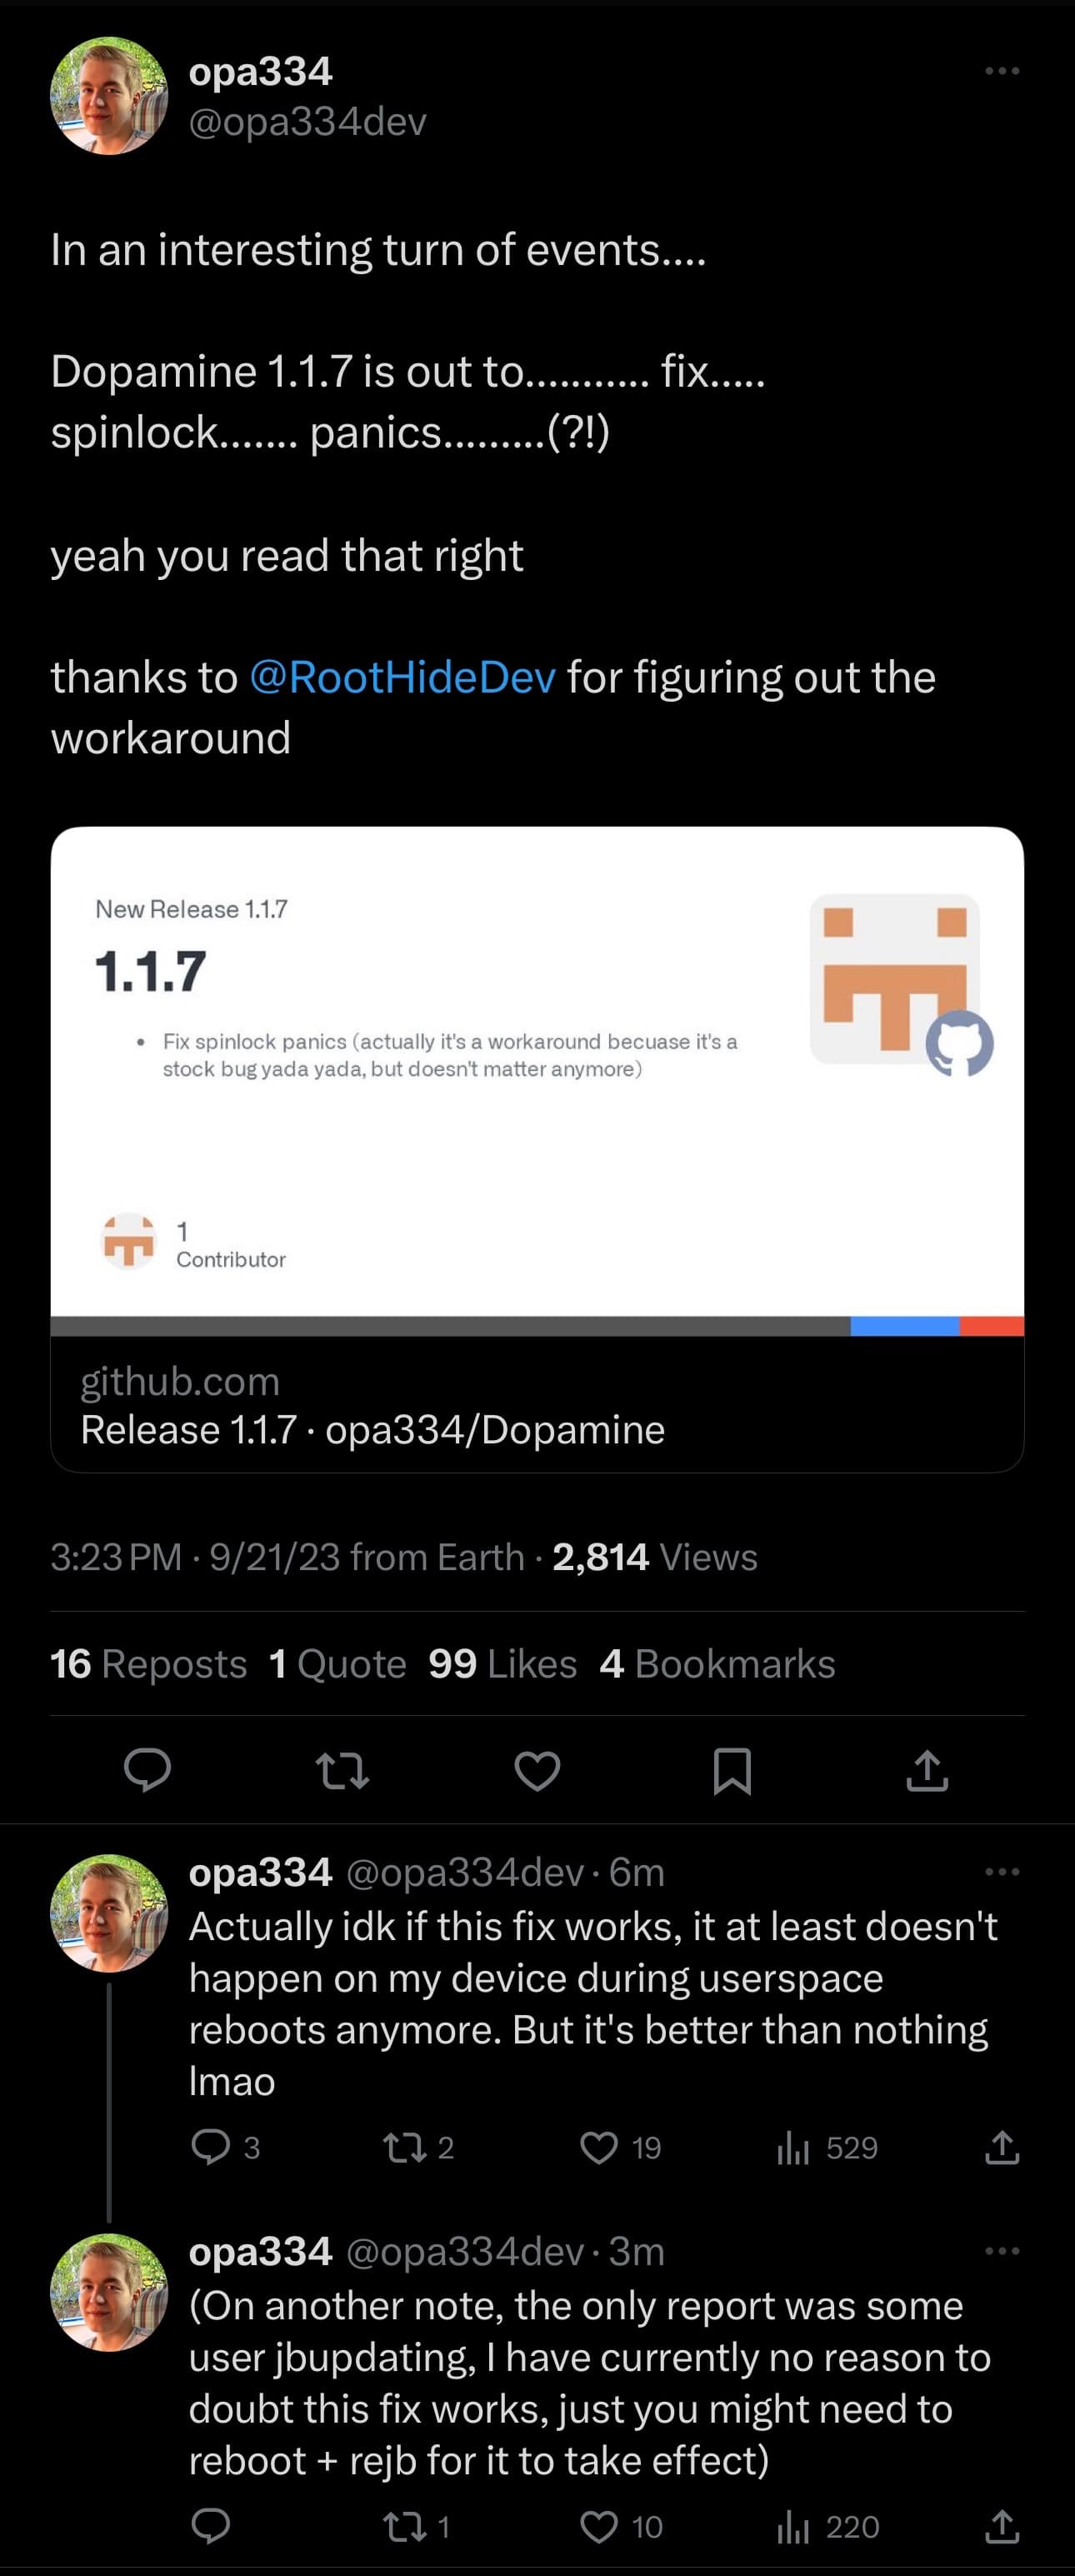 Dopamine v1.1.7 announced.